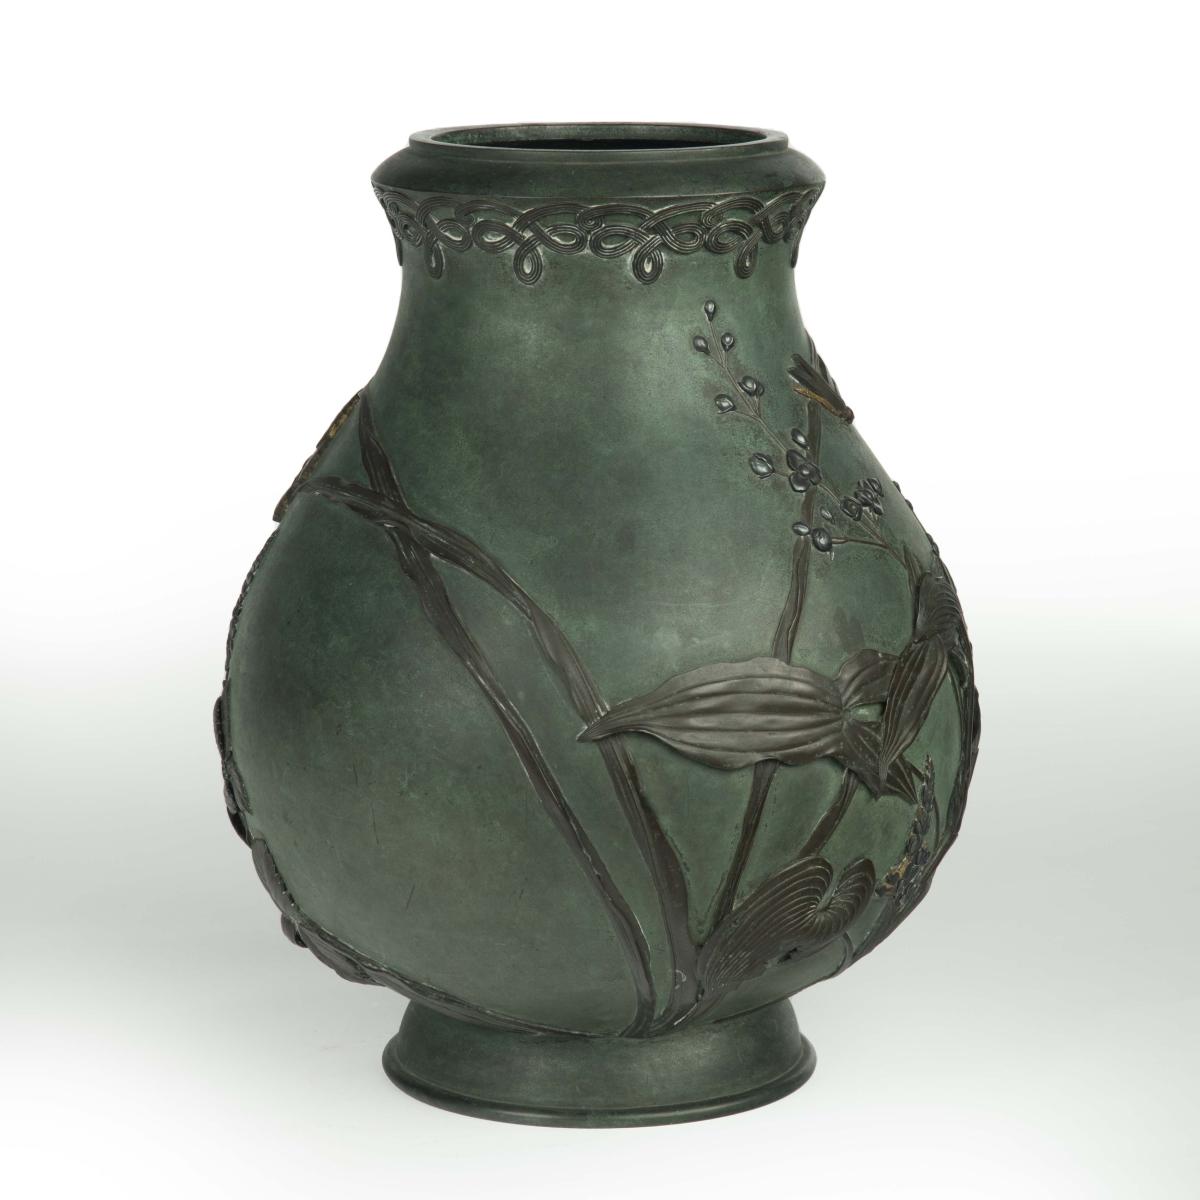 Meiji period patinated bronze vase by Kiryu Kosho Kaisha